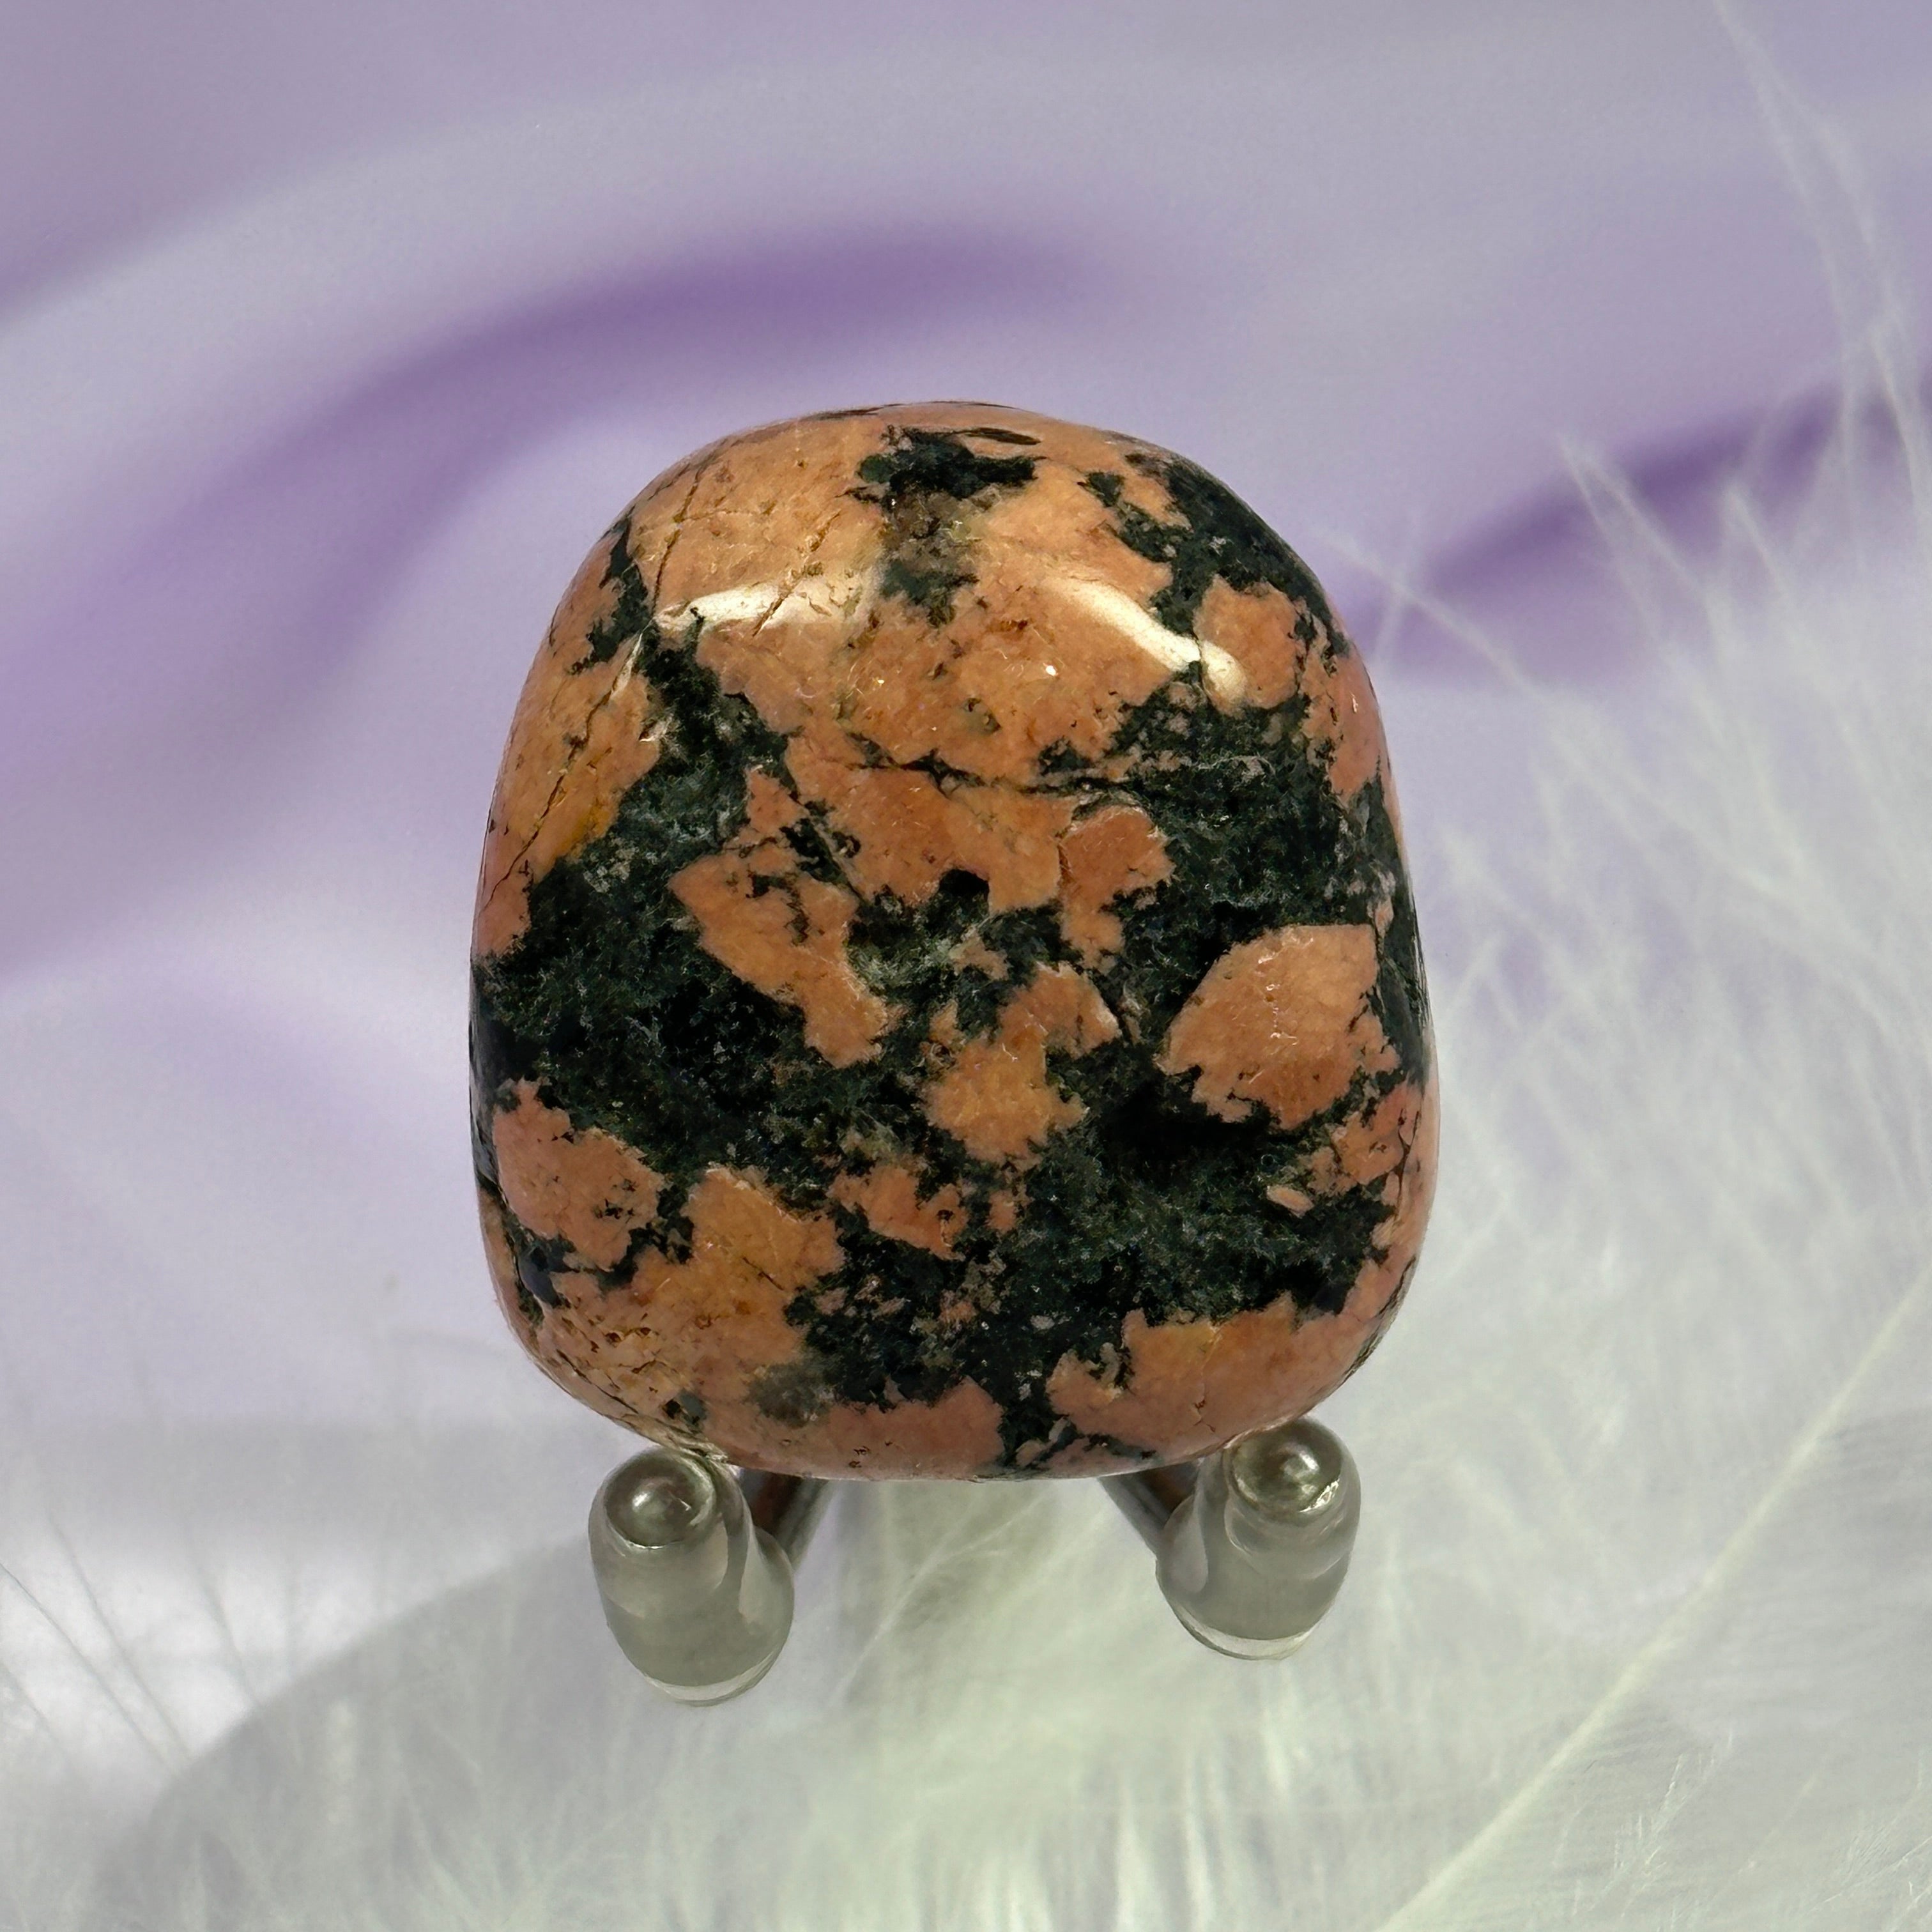 Luxullianite tumble stone from Cornwall, UK 18.4g SN55641